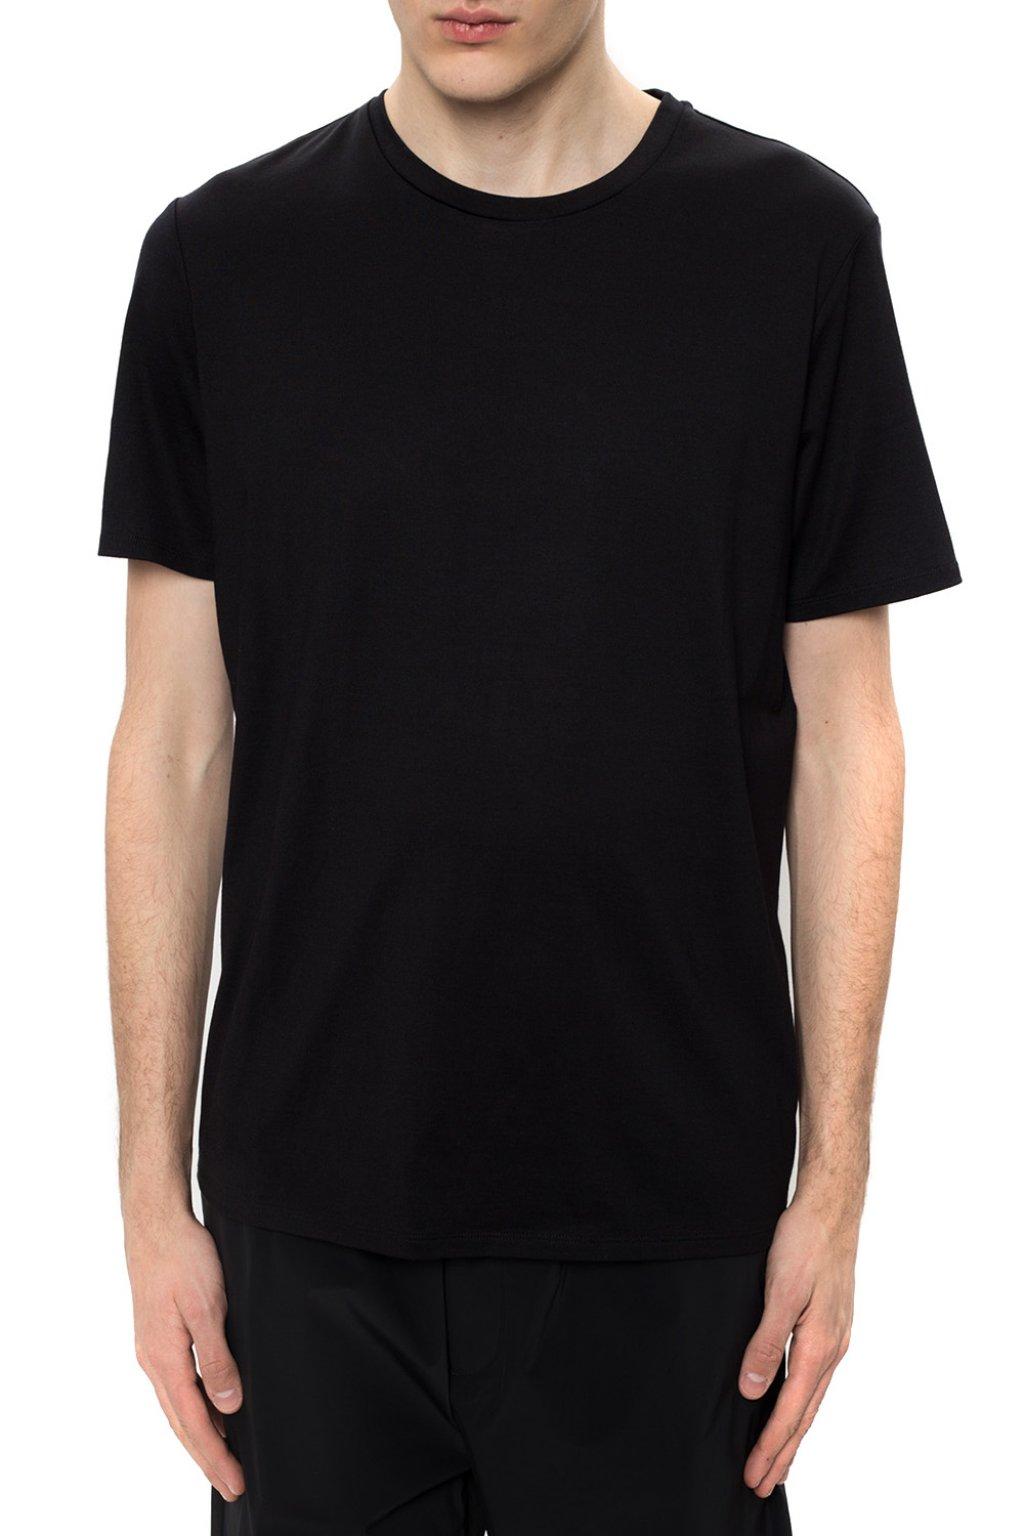 Theory Silk Blend T-shirt Black for Men - Lyst